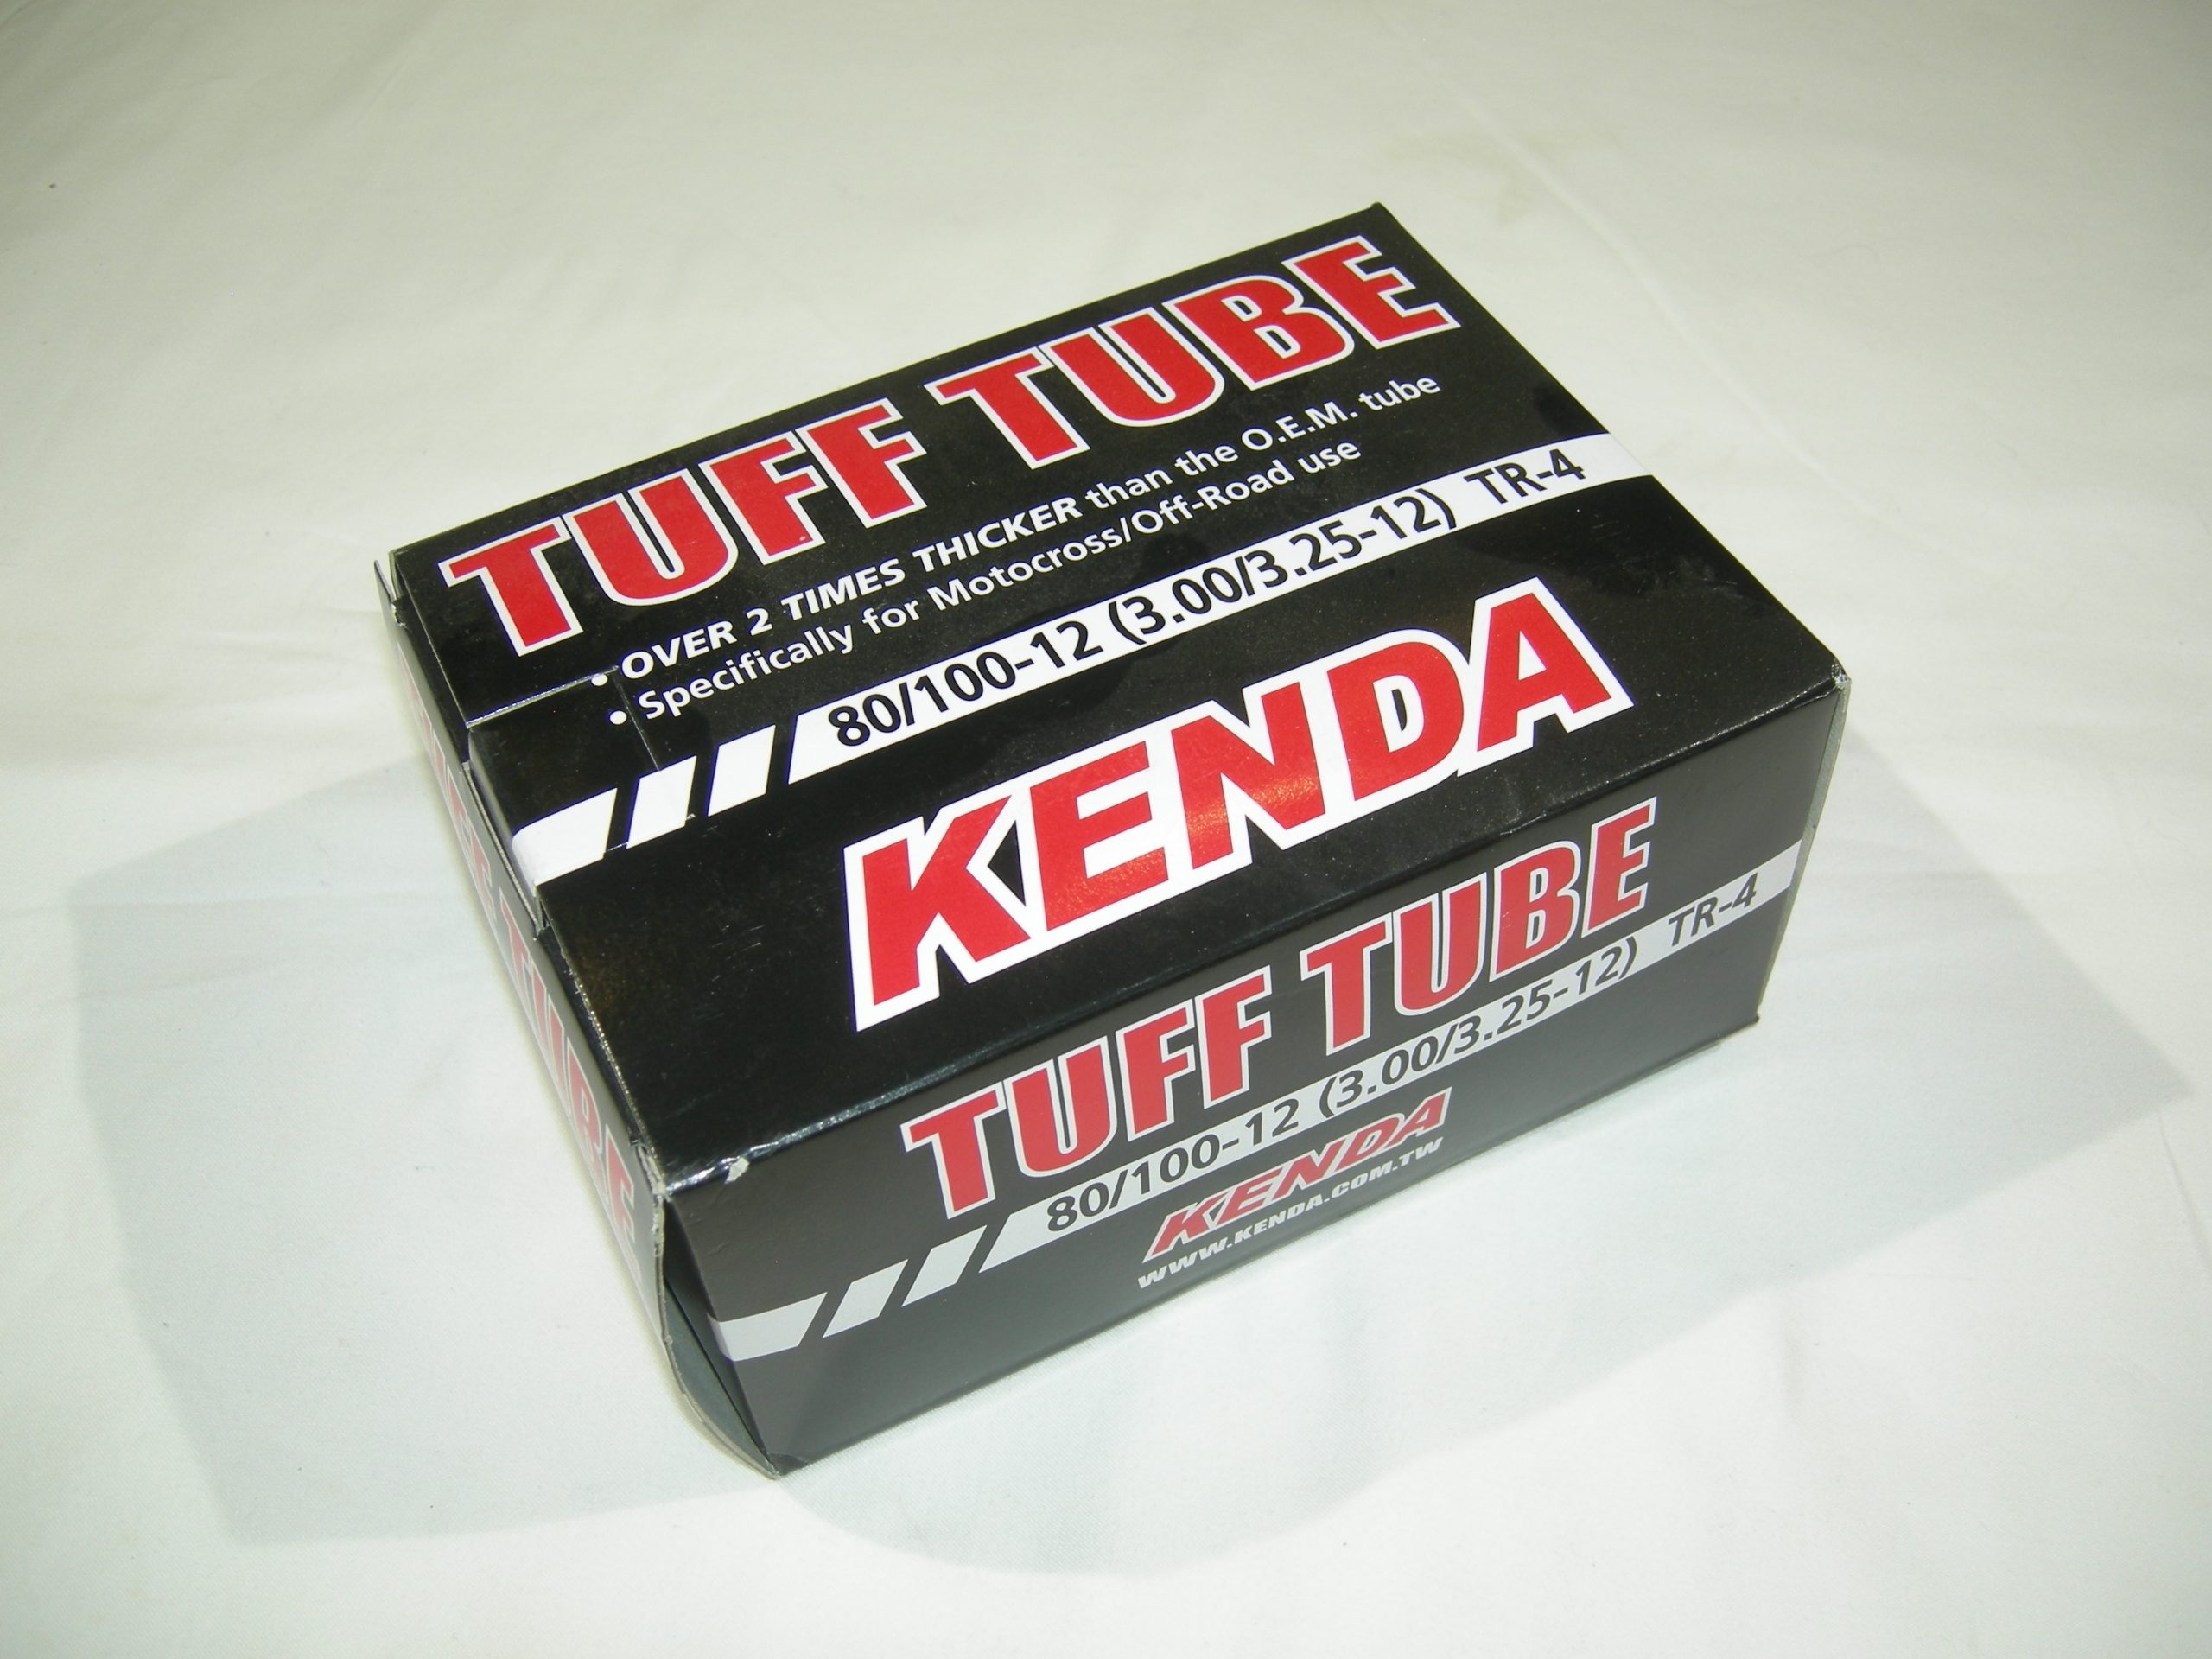 KTM50 Tube front, Kenda tuff tube 60/100-12 (2.50-12)-0